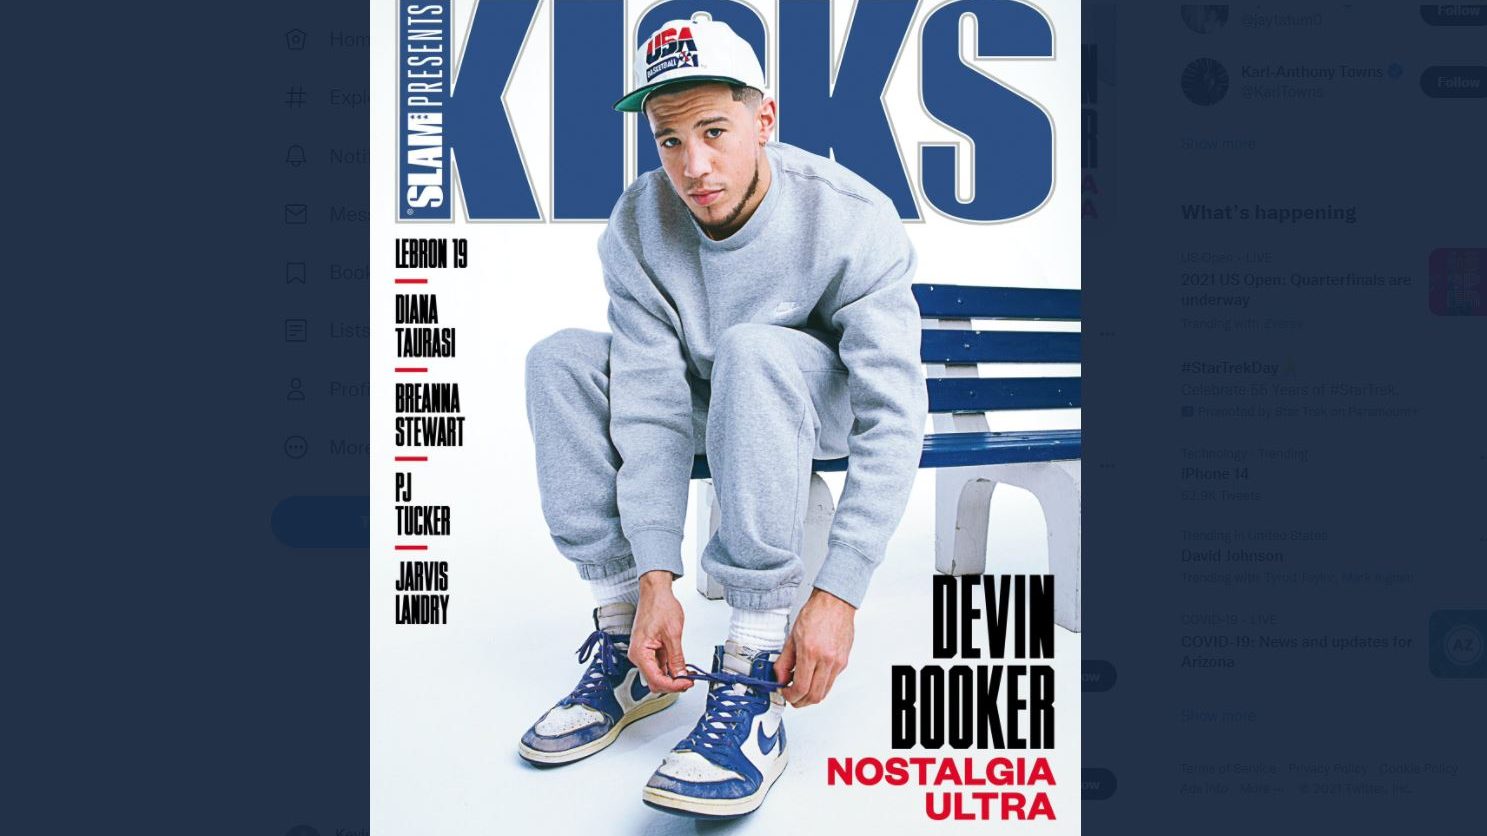 Suns G Devin Booker on the cover of Kicks magazine